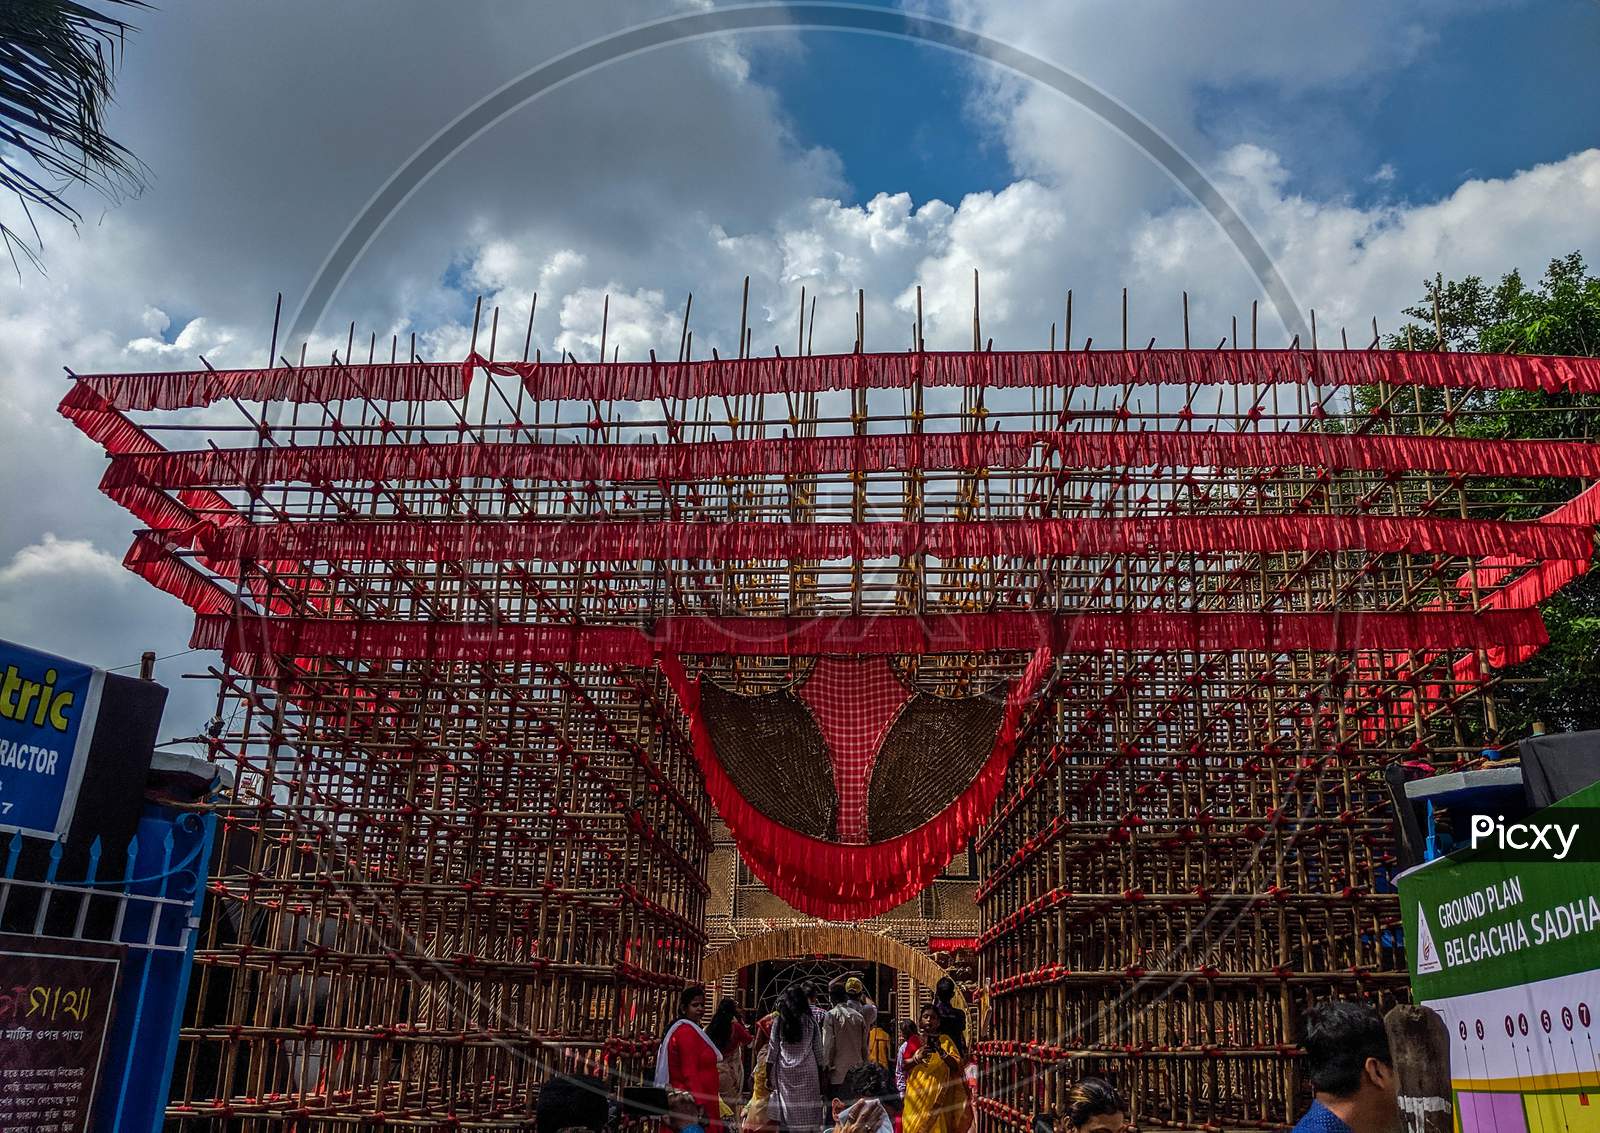 Art of pandals in Kolkata Durga puja, The biggest festival in India